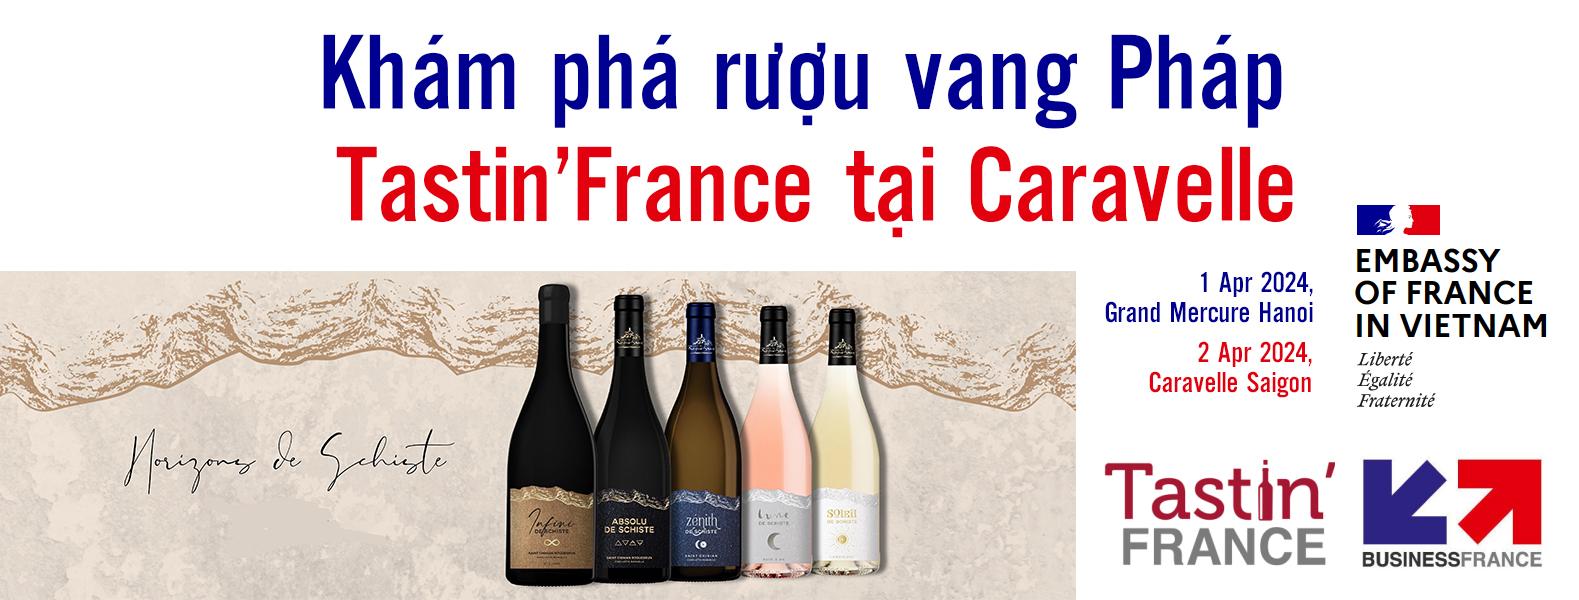 Tastin’France 2024 - Khám phá rượu vang Pháp Tastin’France tại Caravelle